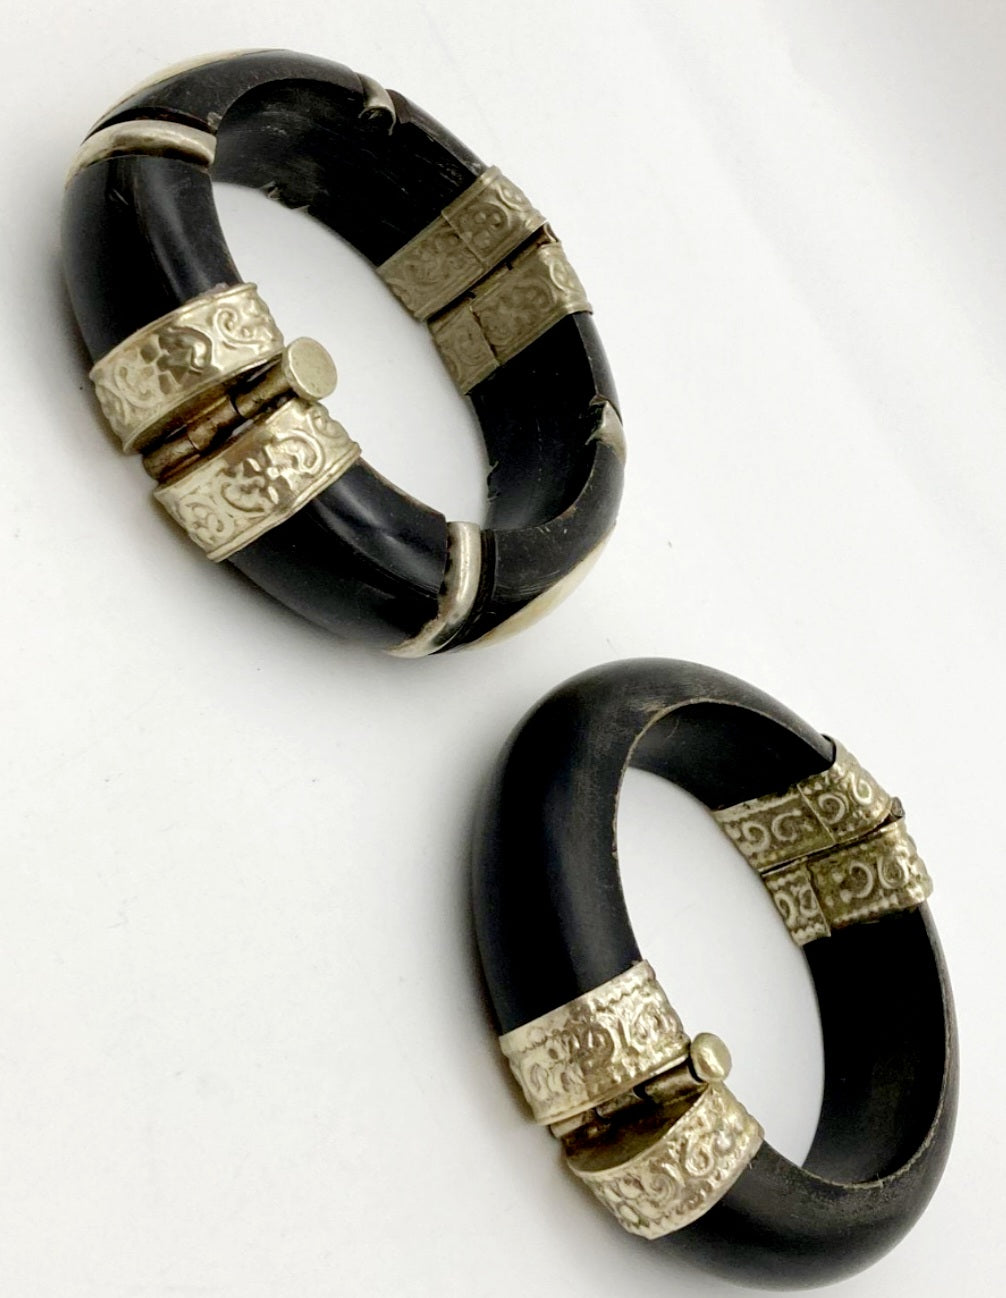 Stunning *Horn Pin Clasp Cuff Bracelet Bangle Set